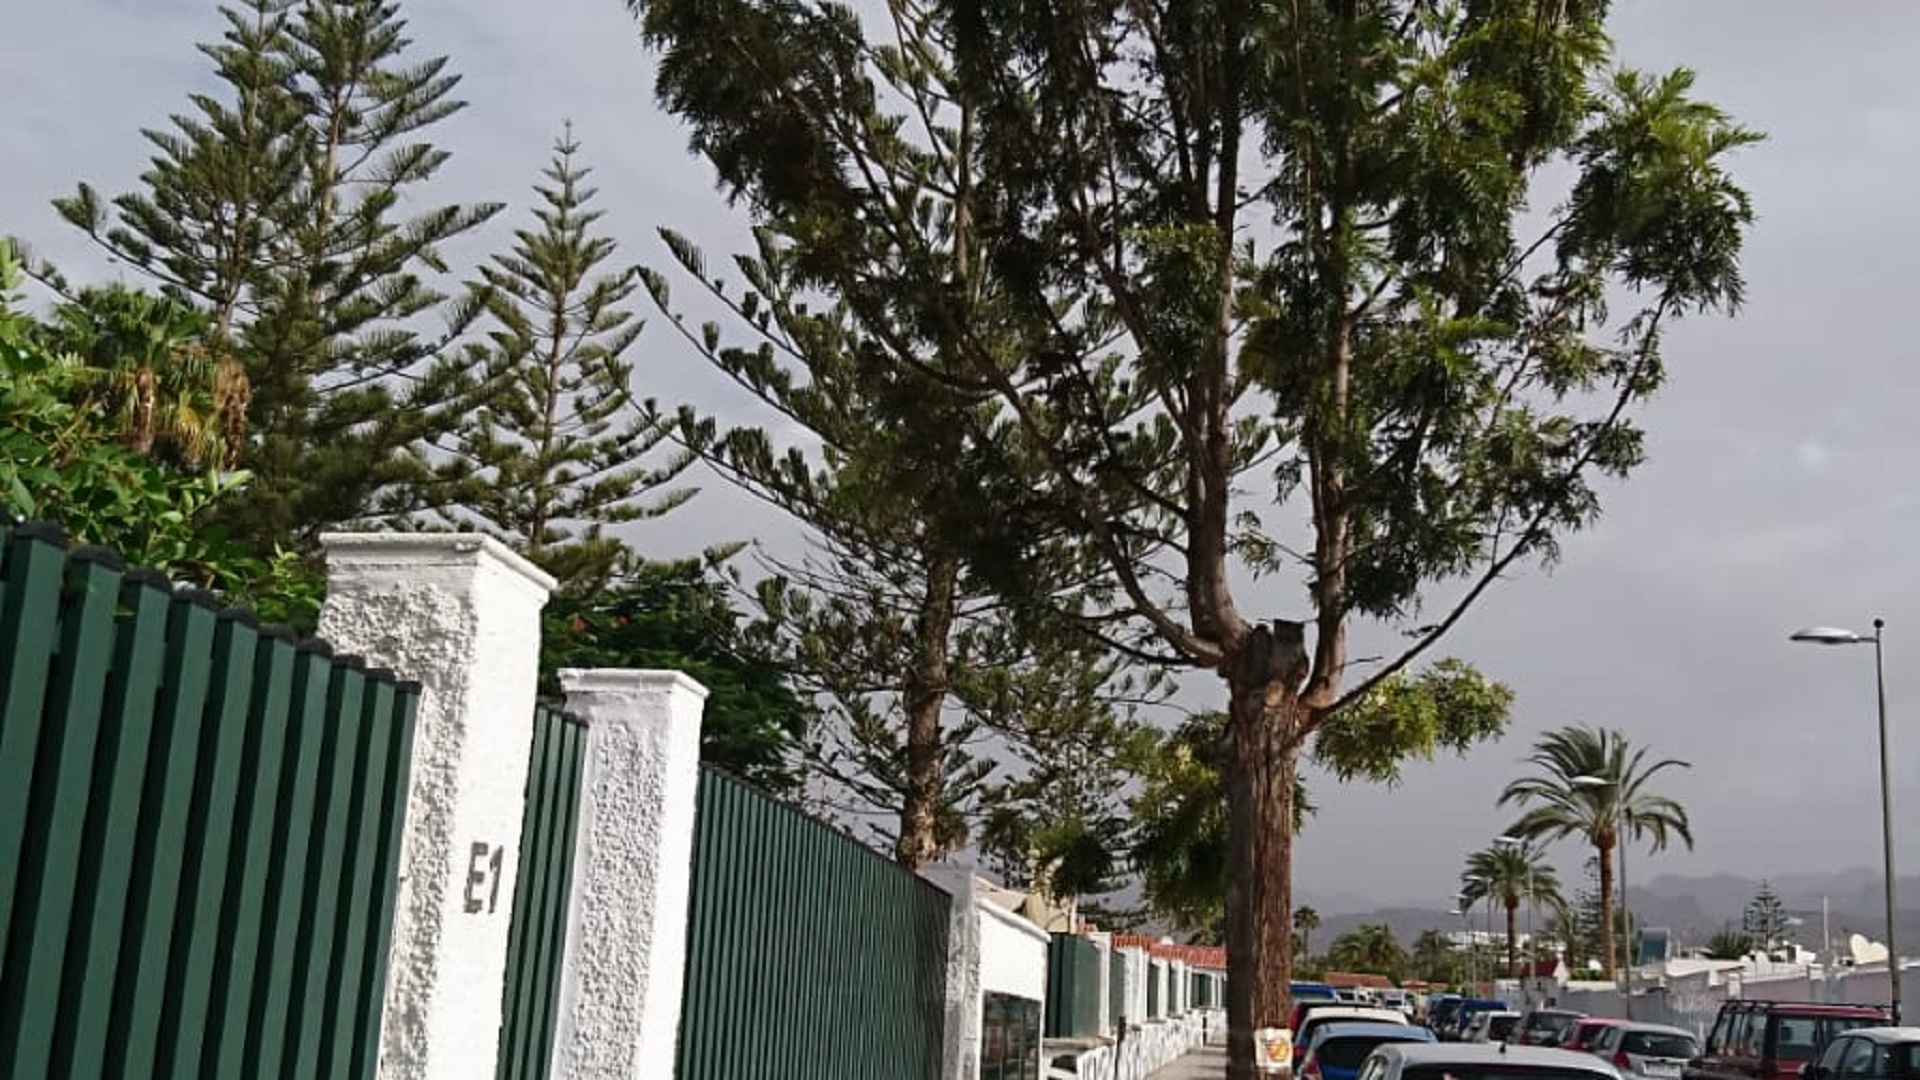 La “manía taladora de árboles” llega a Playa del Inglés | maspalomasnews.com